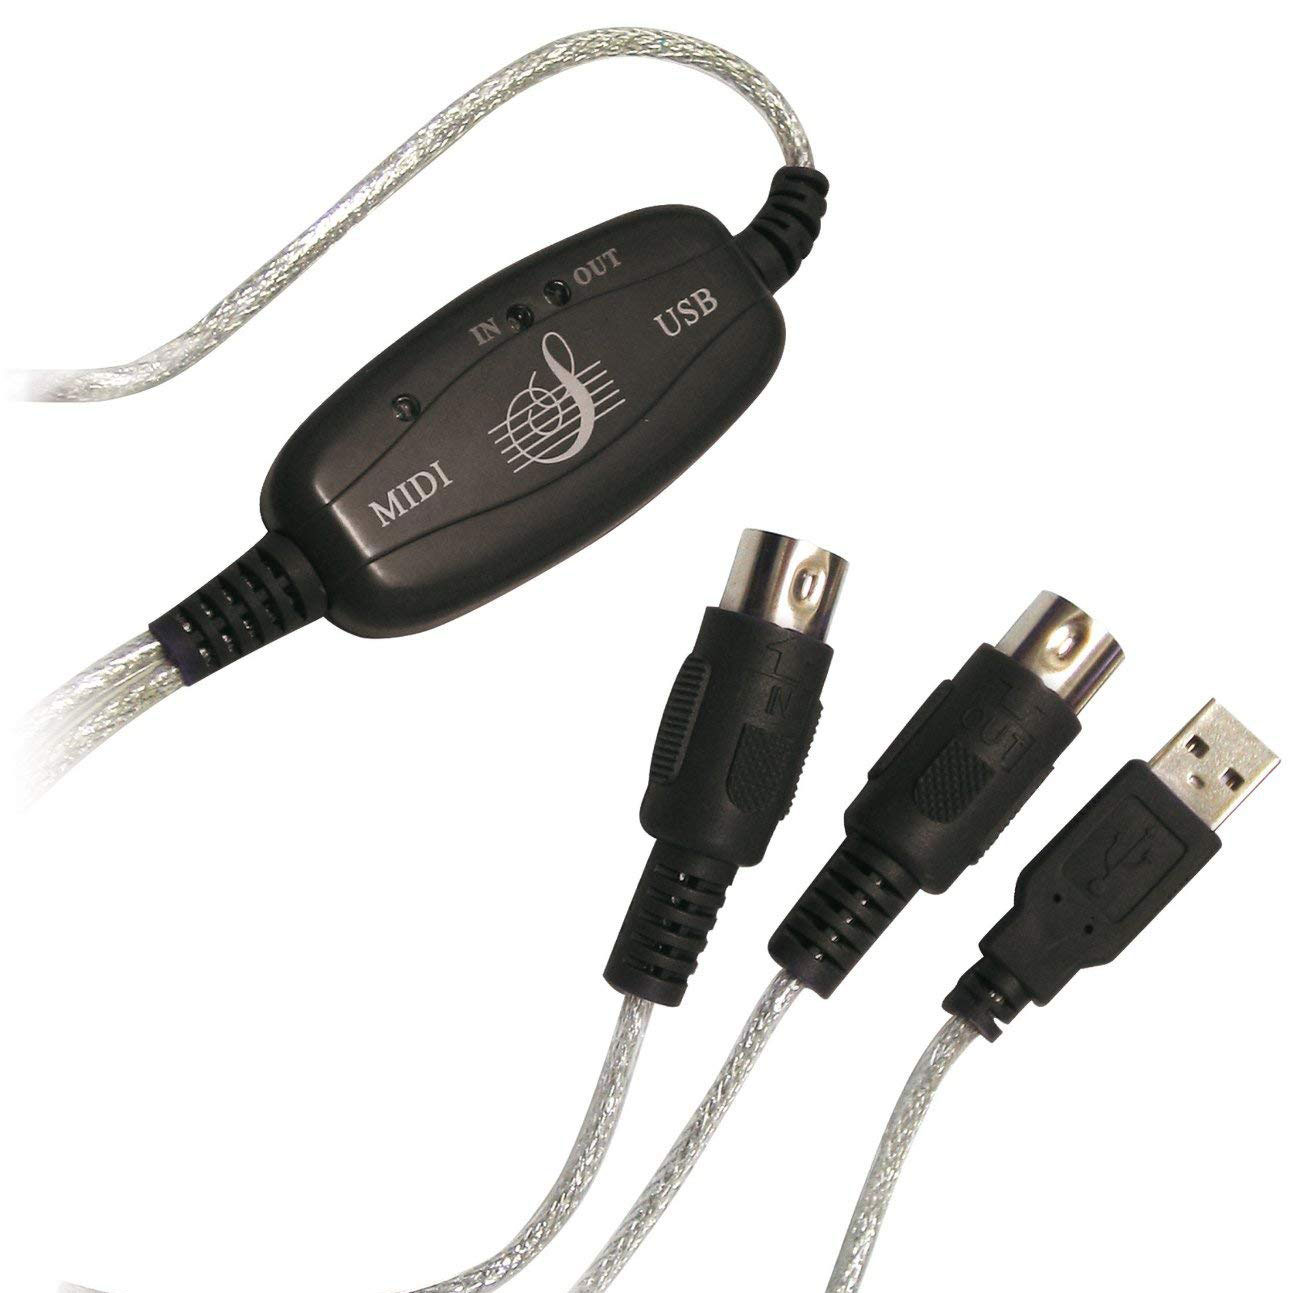 USB To MIDI Keyboard Interface Converter Cable Adapter Support Windows Win XP Win Vista Mac OS